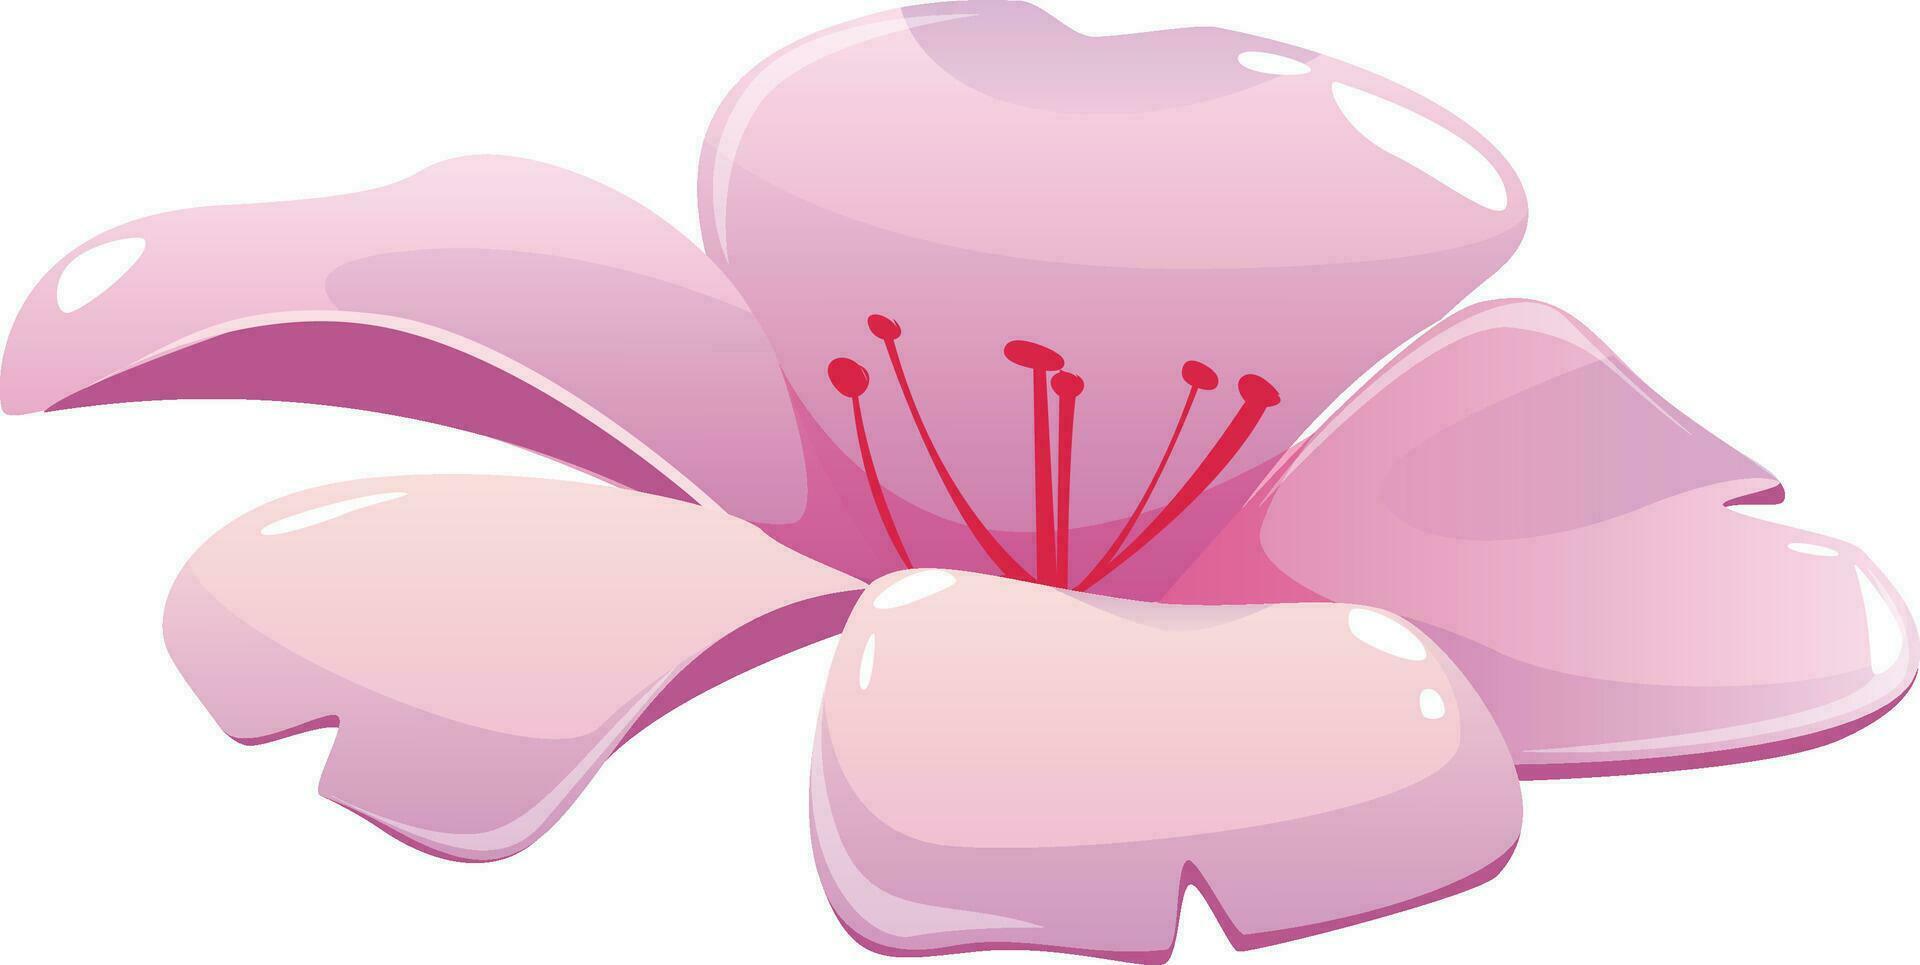 Single japanese cherry flower, sakura, pink flower,Sakura flower,Spring Tree Flowers, vector